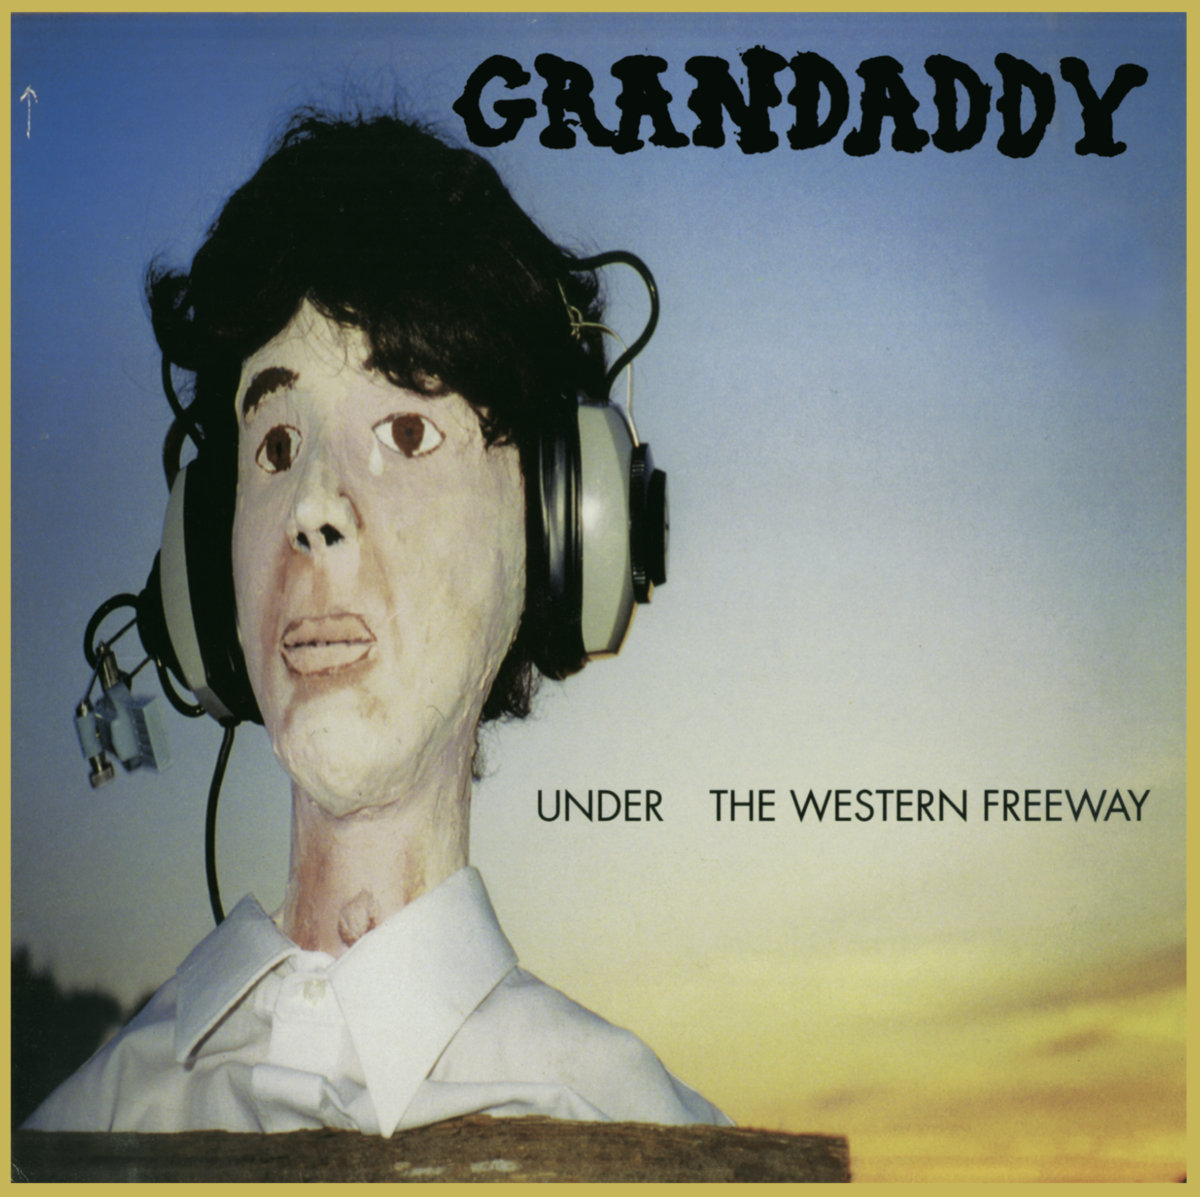 Grandaddy's "Under the Western Freeway" Album Cover